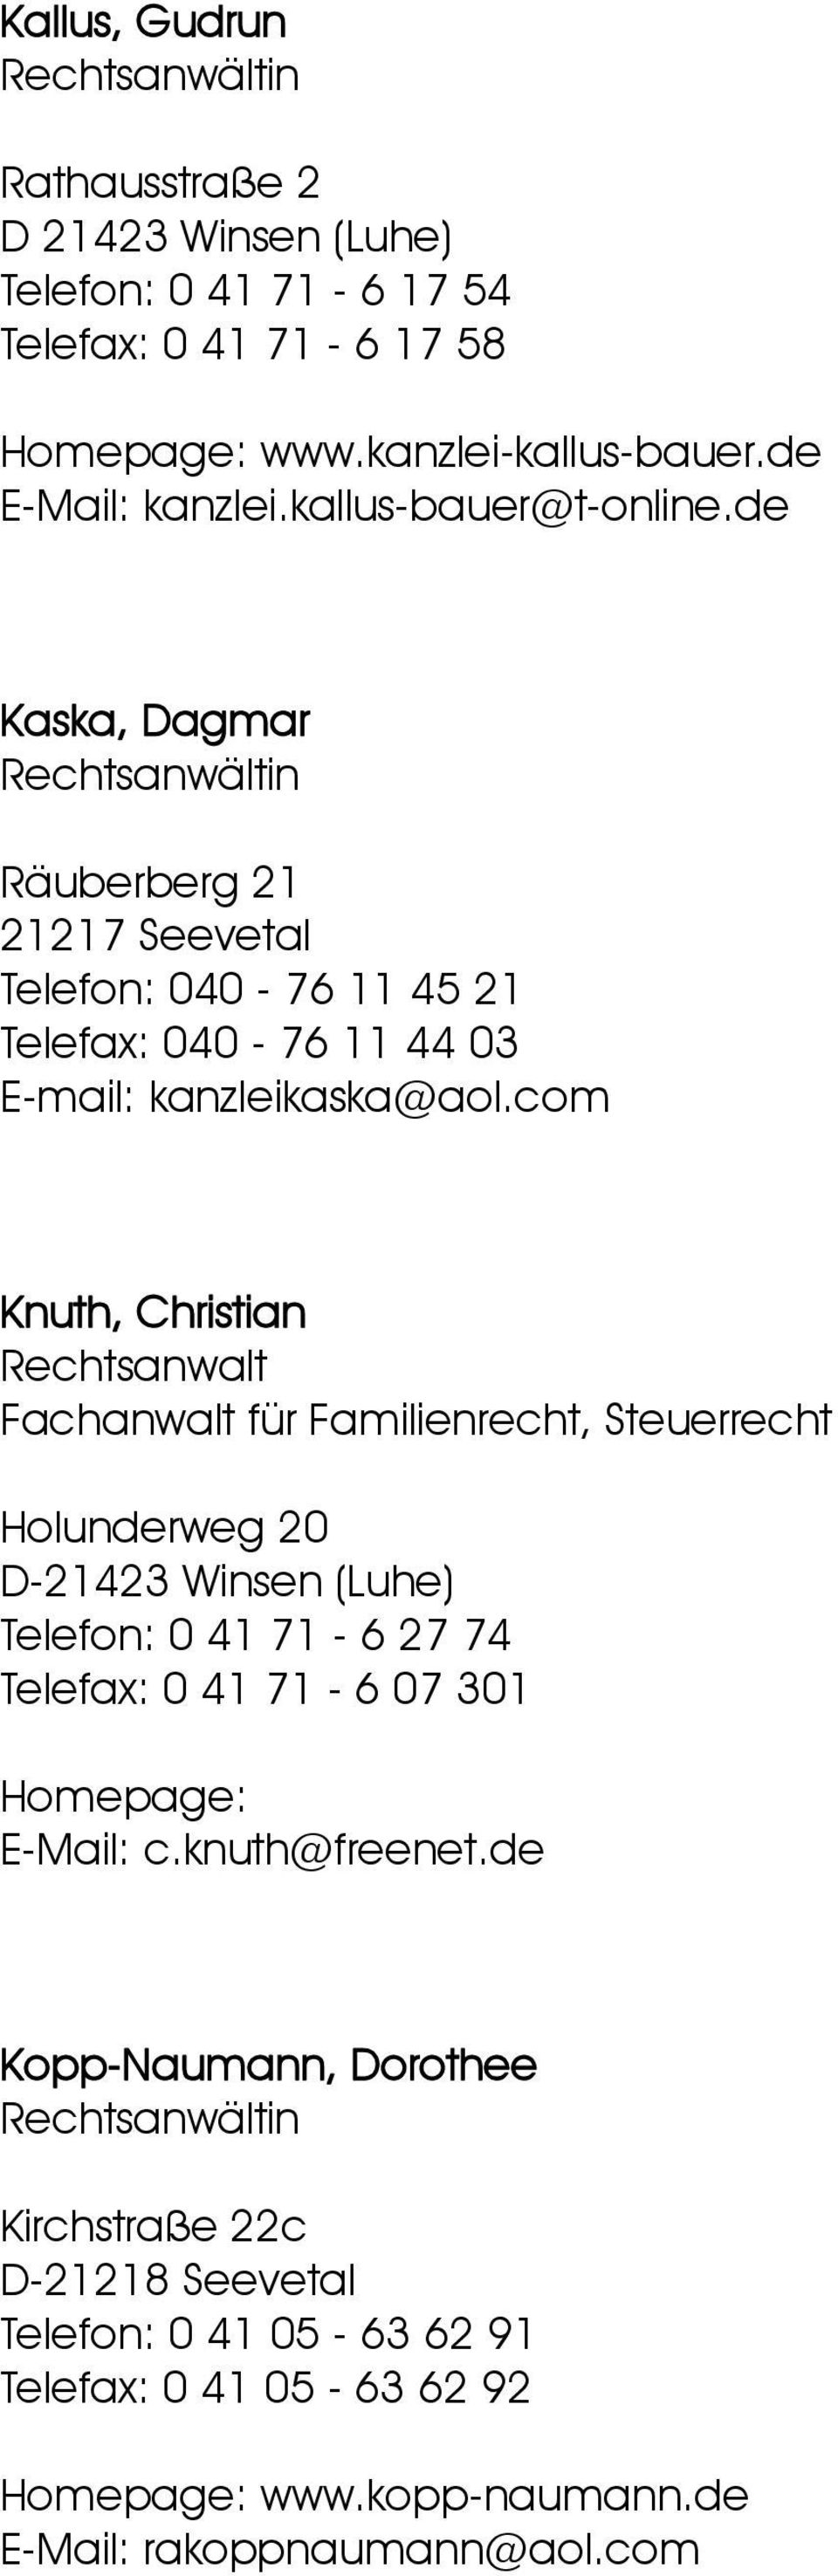 com Knuth, Christian Fachanwalt für Familienrecht, Steuerrecht Holunderweg 20 Telefon: 0 41 71-6 27 74 Telefax: 0 41 71-6 07 301 E-Mail: c.